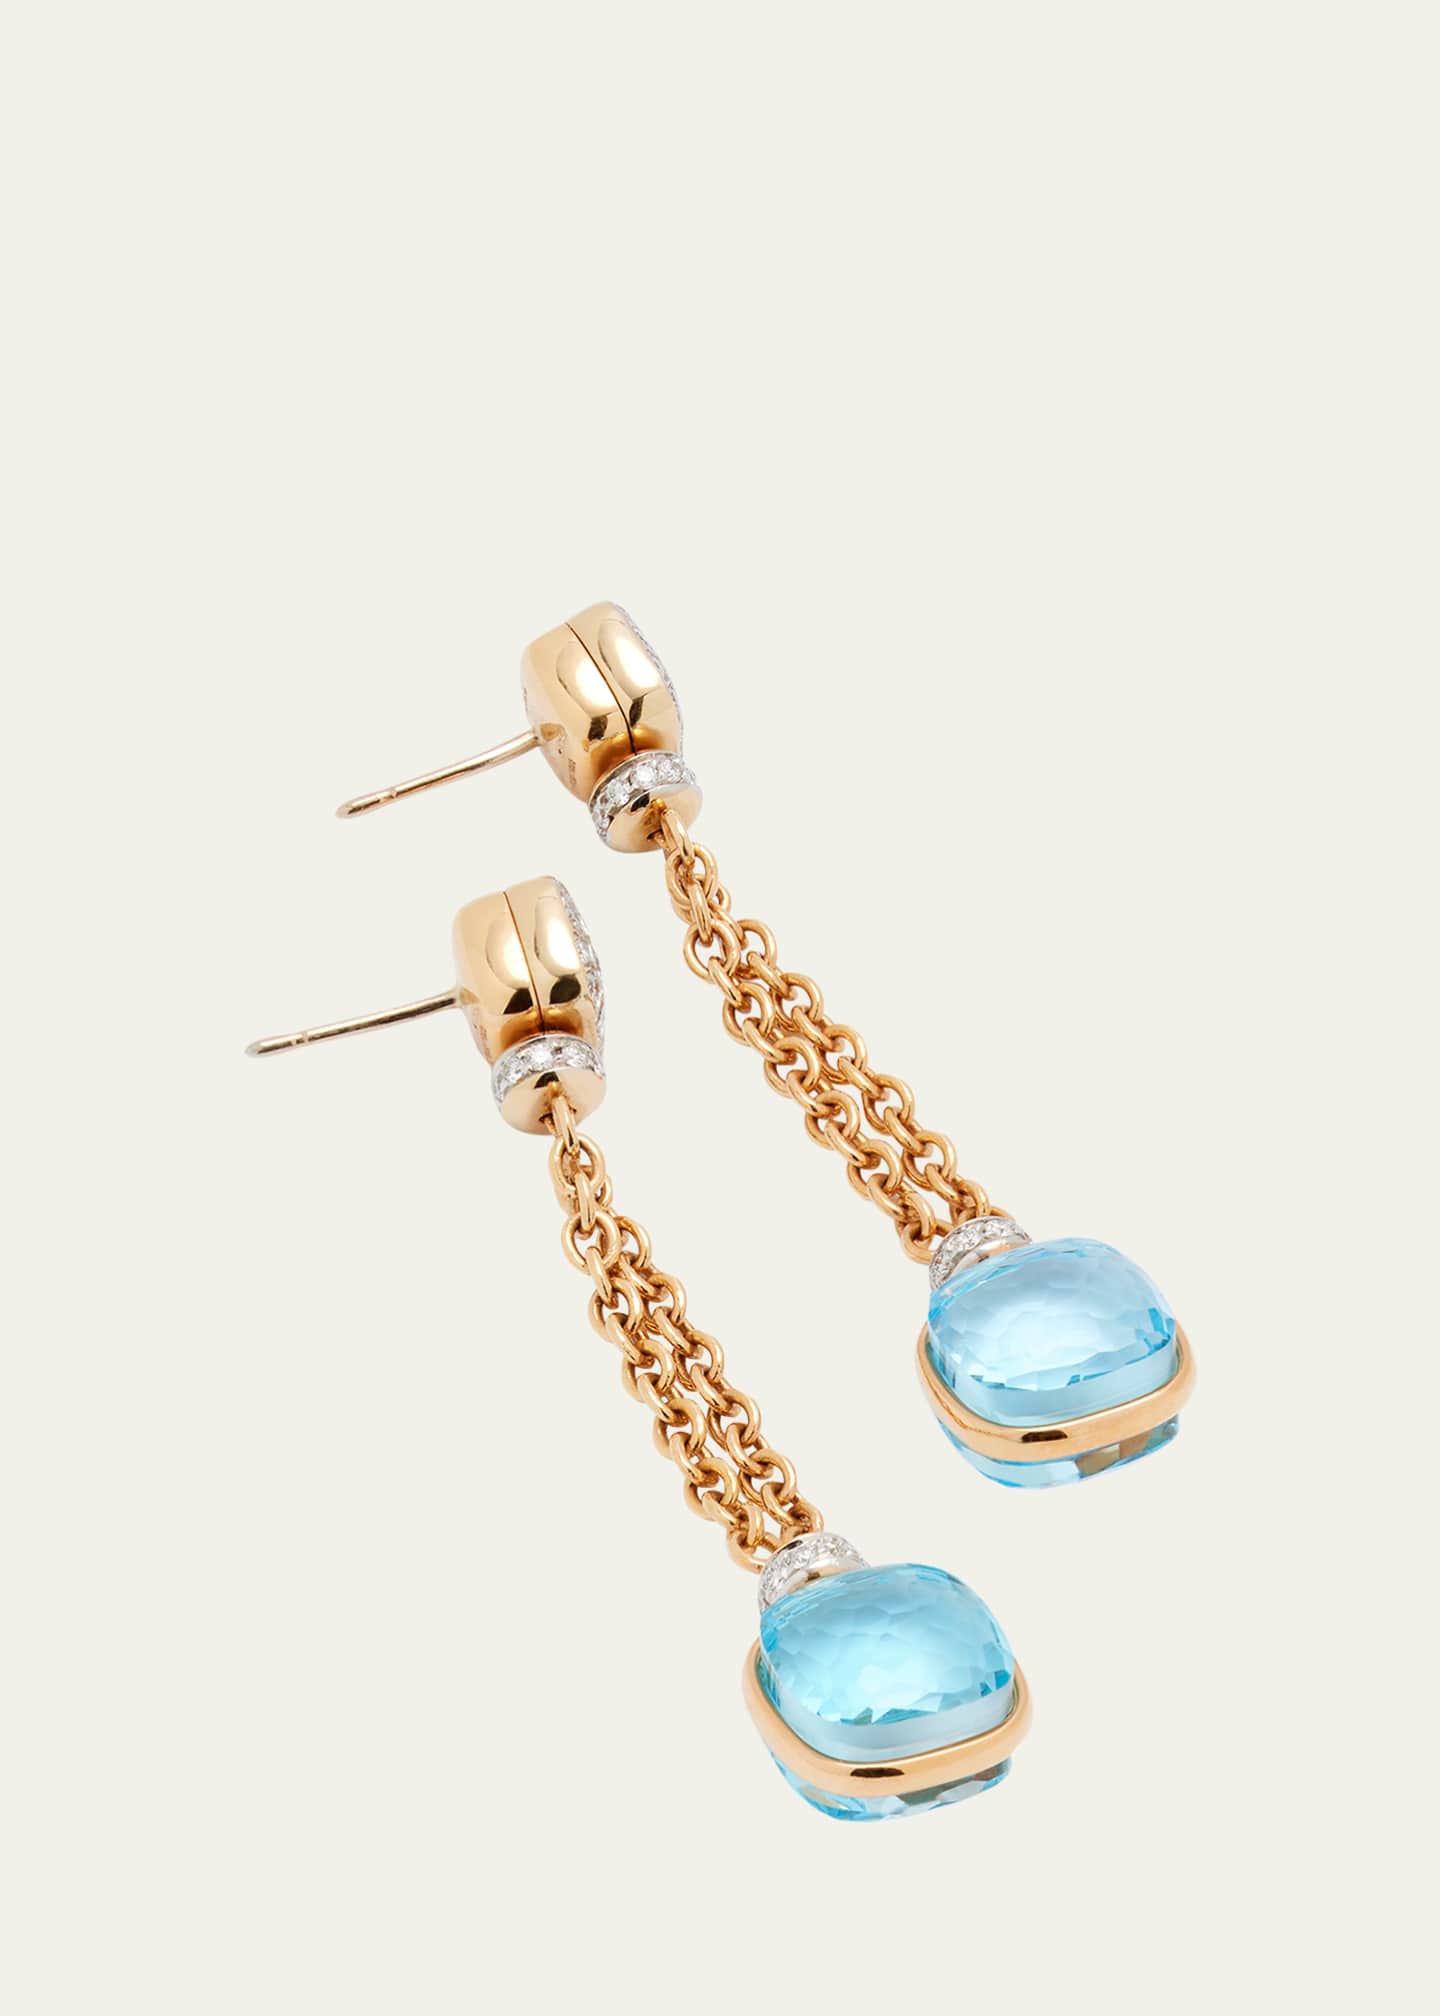 Pomellato Nudo 18K Gold Sky Blue Topaz Diamond Drop Earrings Image 3 of 4